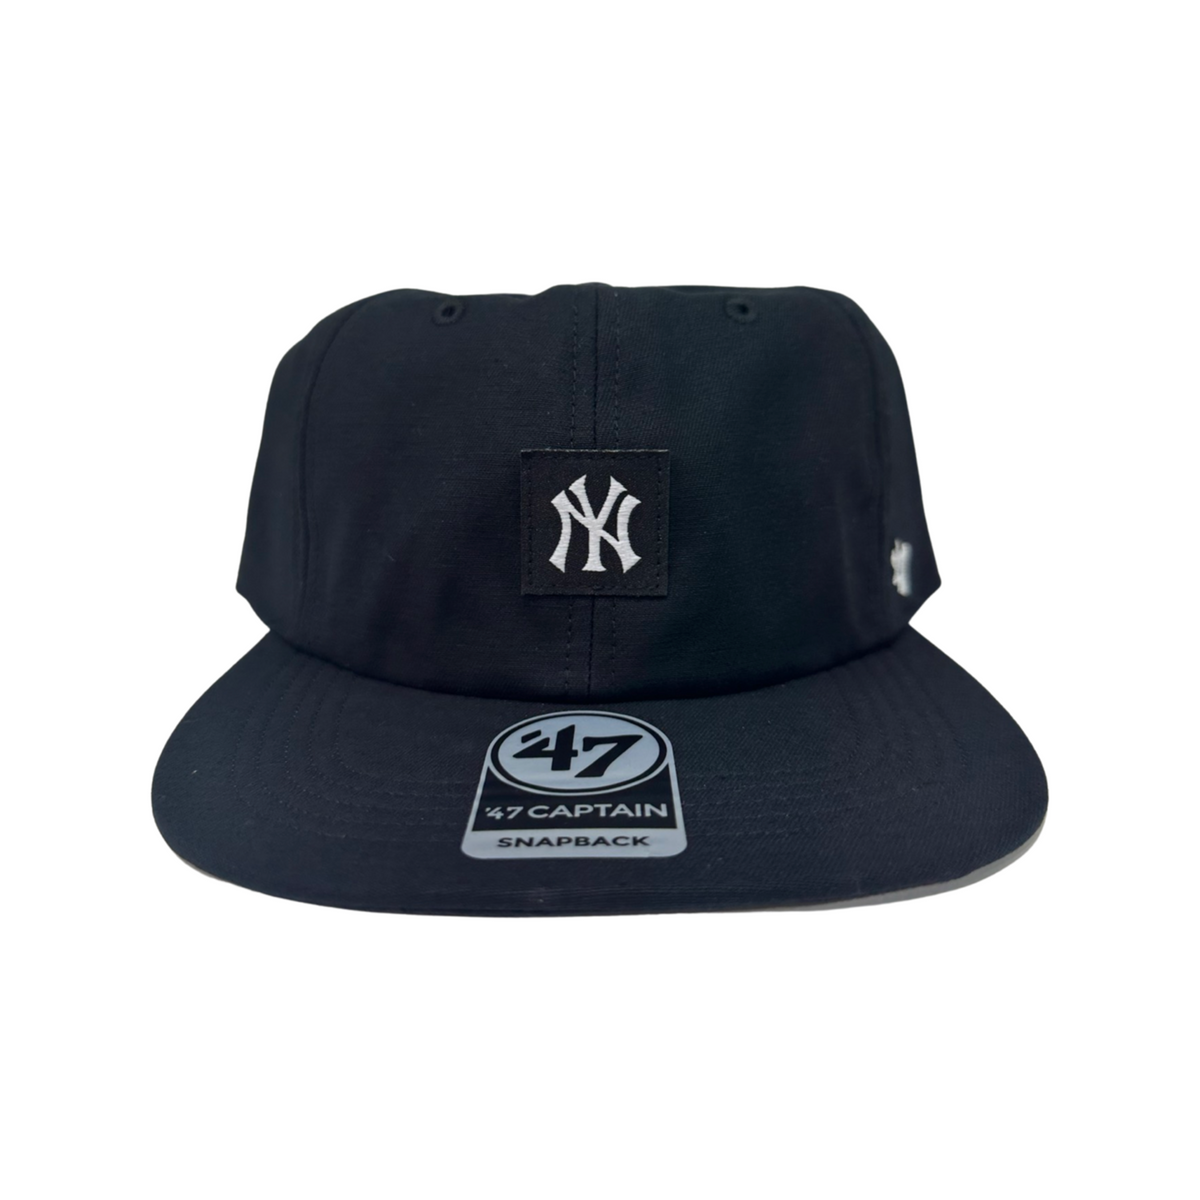 New York Yankees Black COMPACT 47 CAPTAIN RL